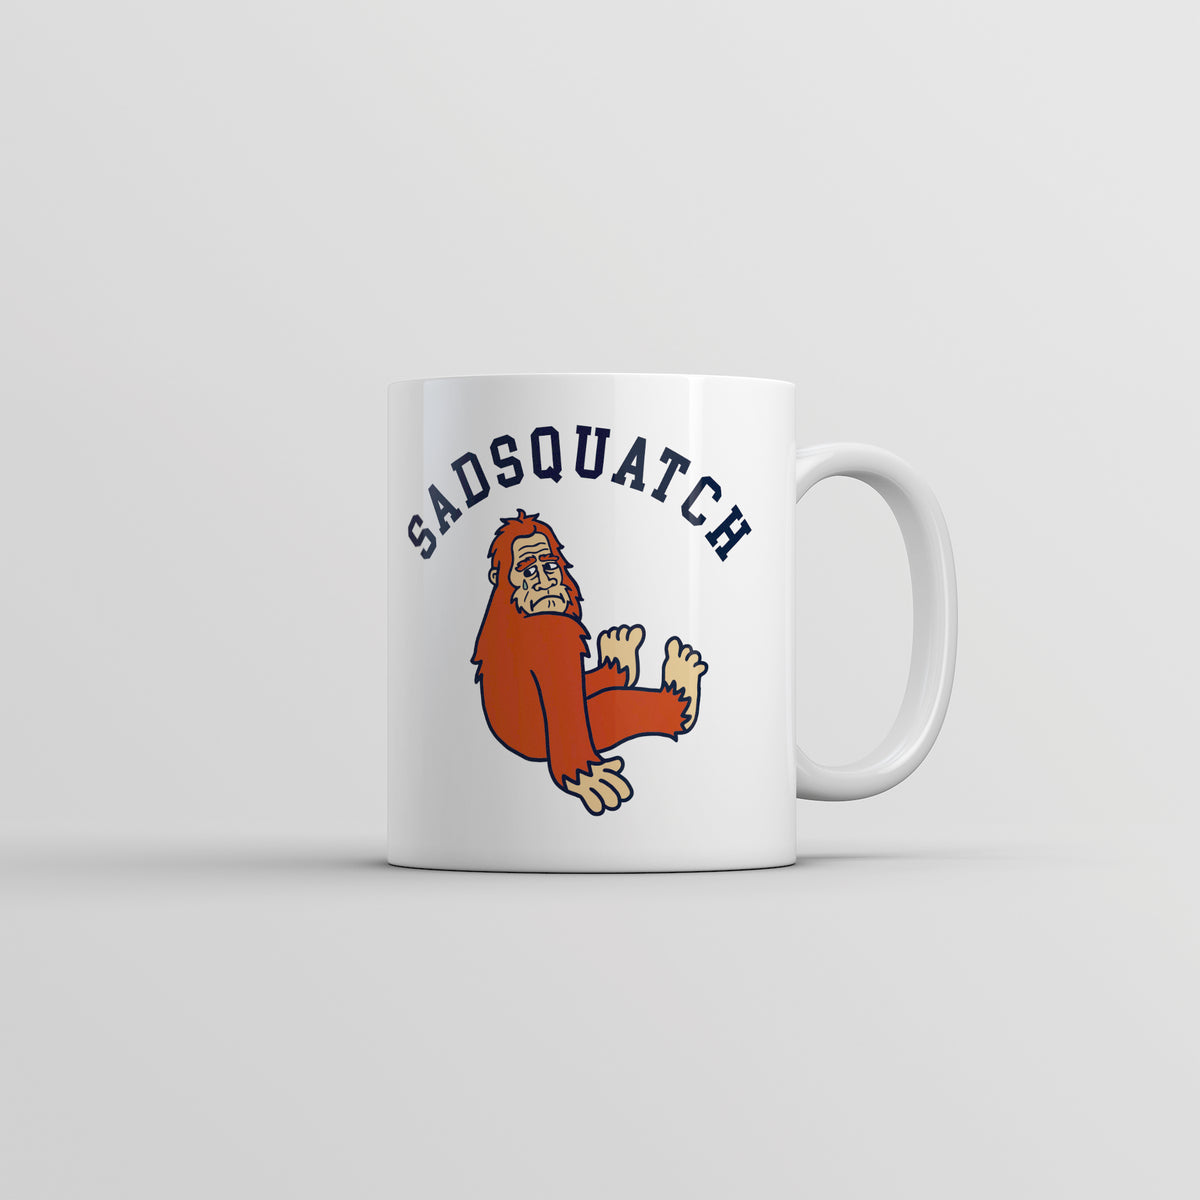 Funny White Sadsquatch Coffee Mug Nerdy sarcastic Tee